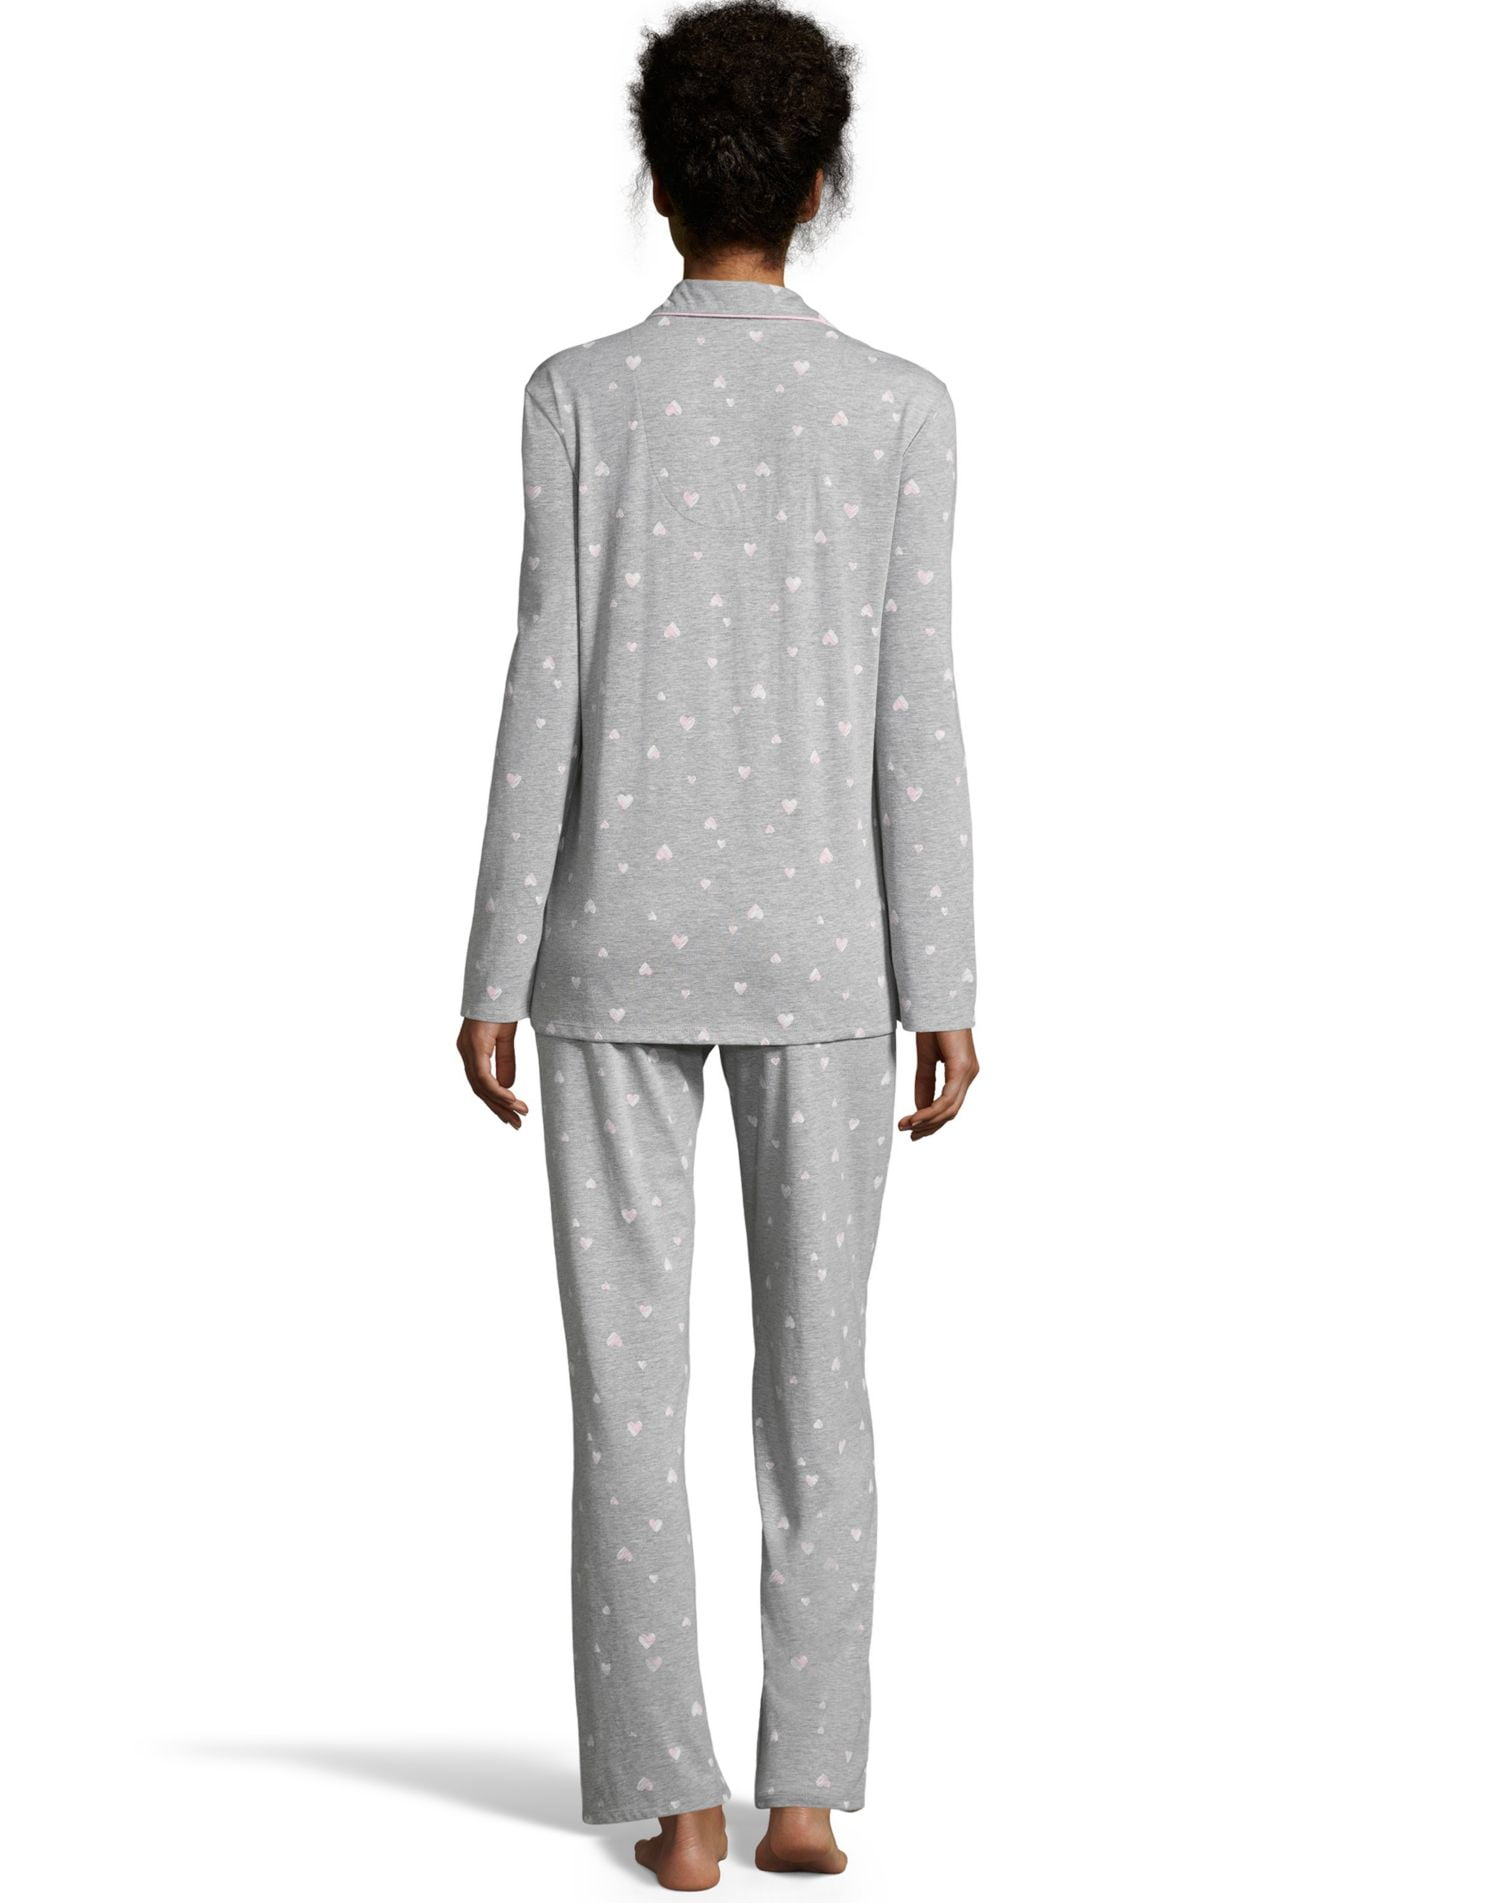 Laura Ashley 2 piece womens French print pajama set Size XL - $24 - From  Brenda